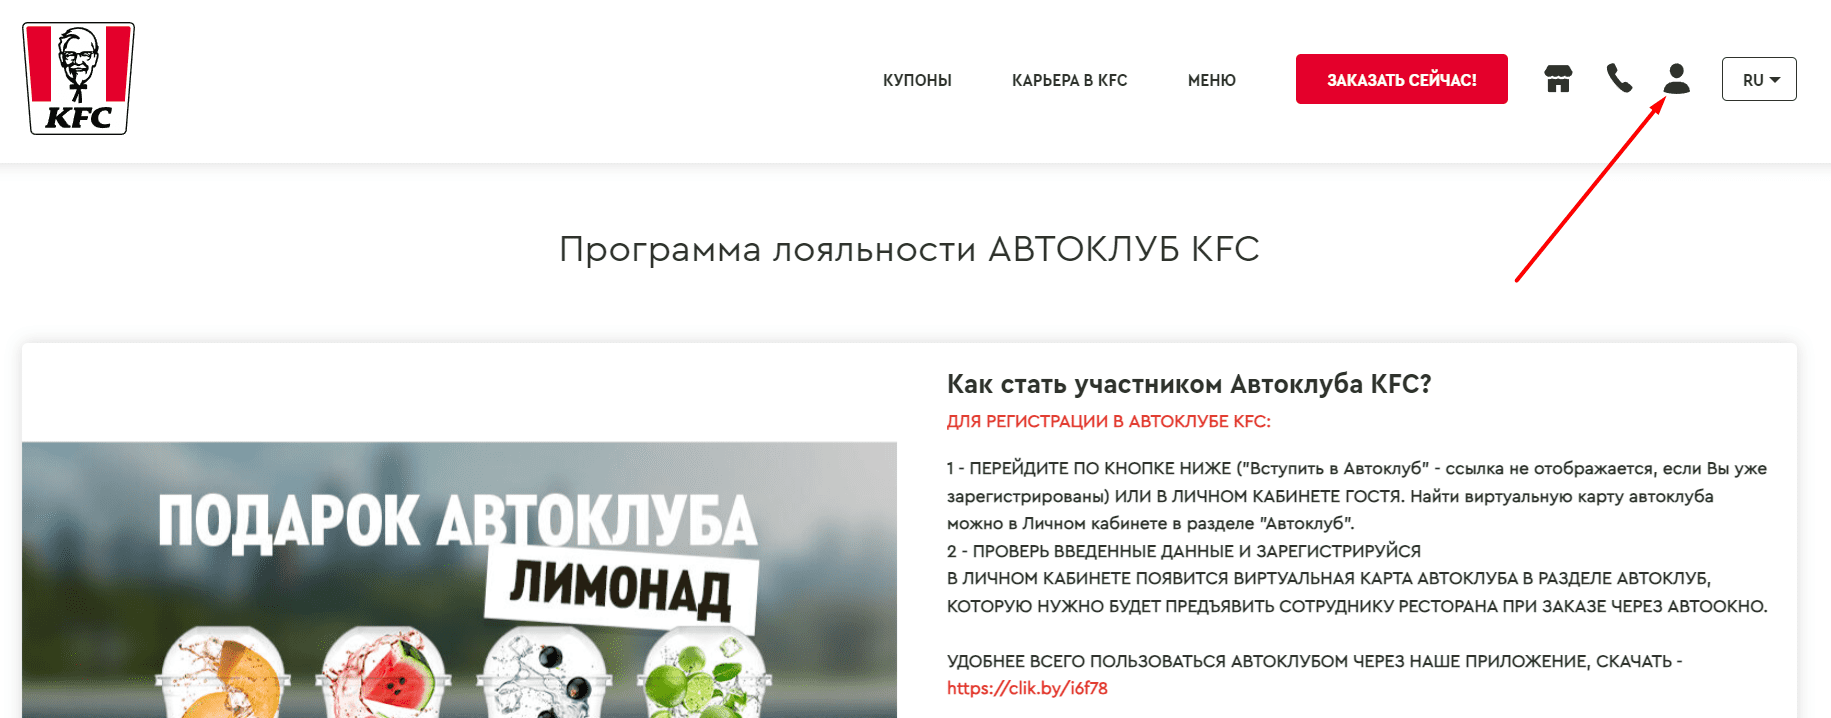 Программа лояльности АВТОКЛУБ KFC (kfc.by/auto-club)